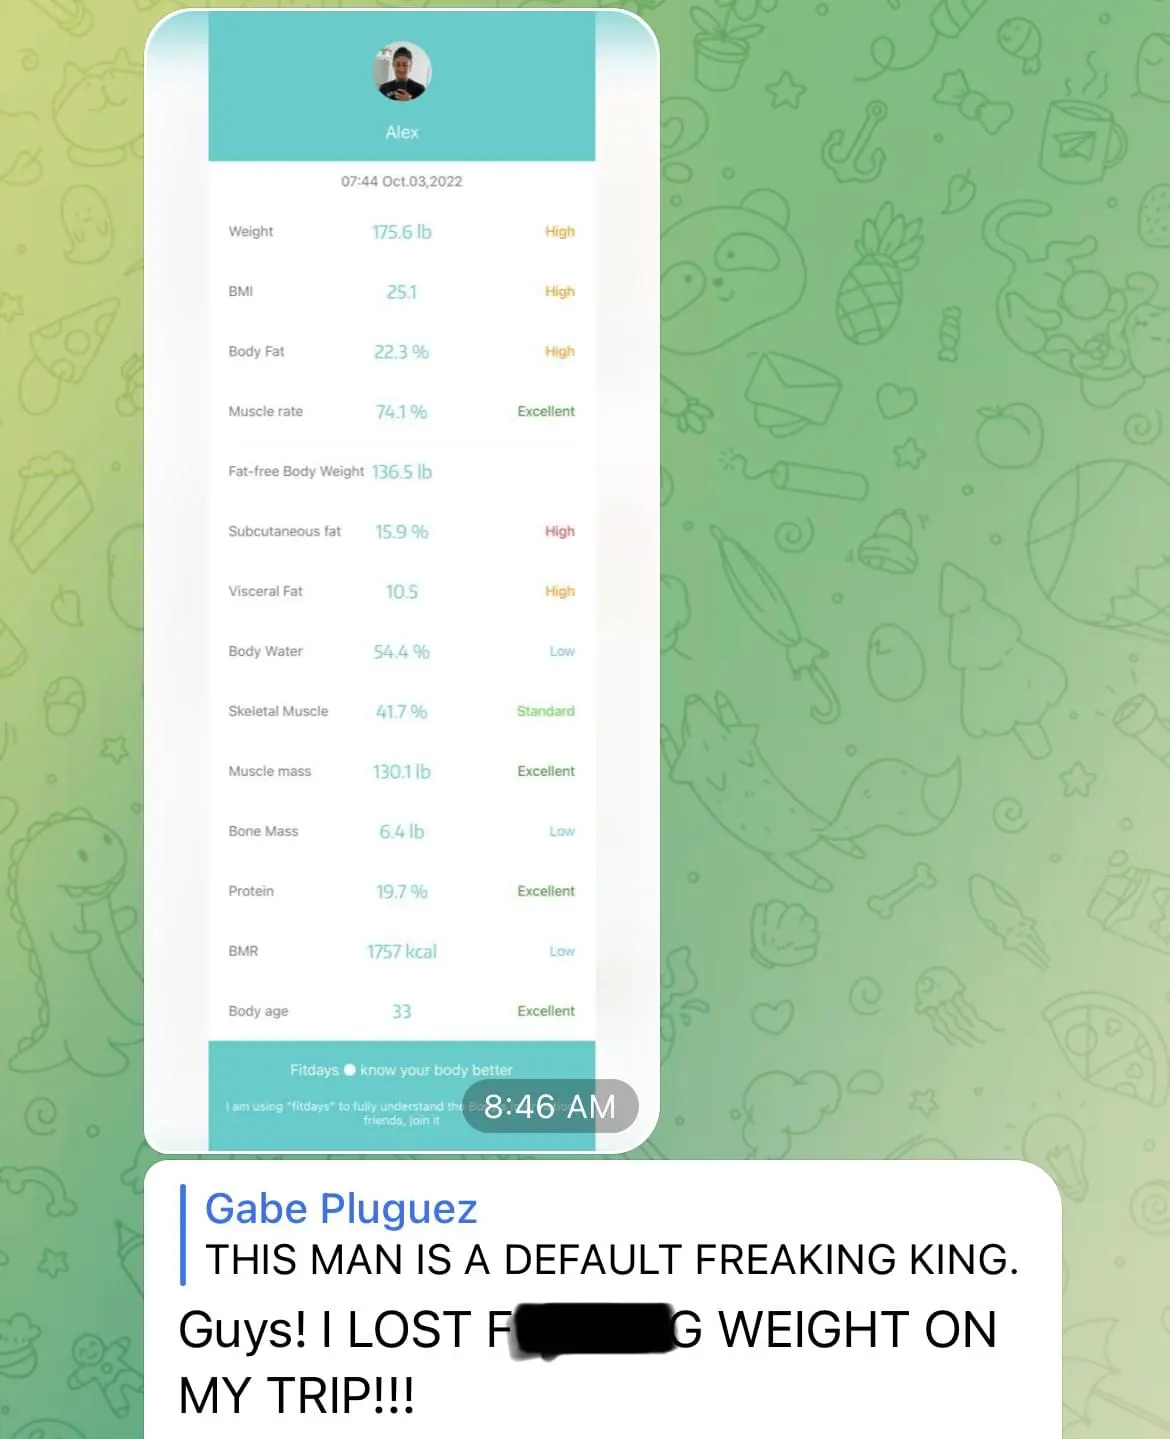 'screenshot of Default Kings community chat